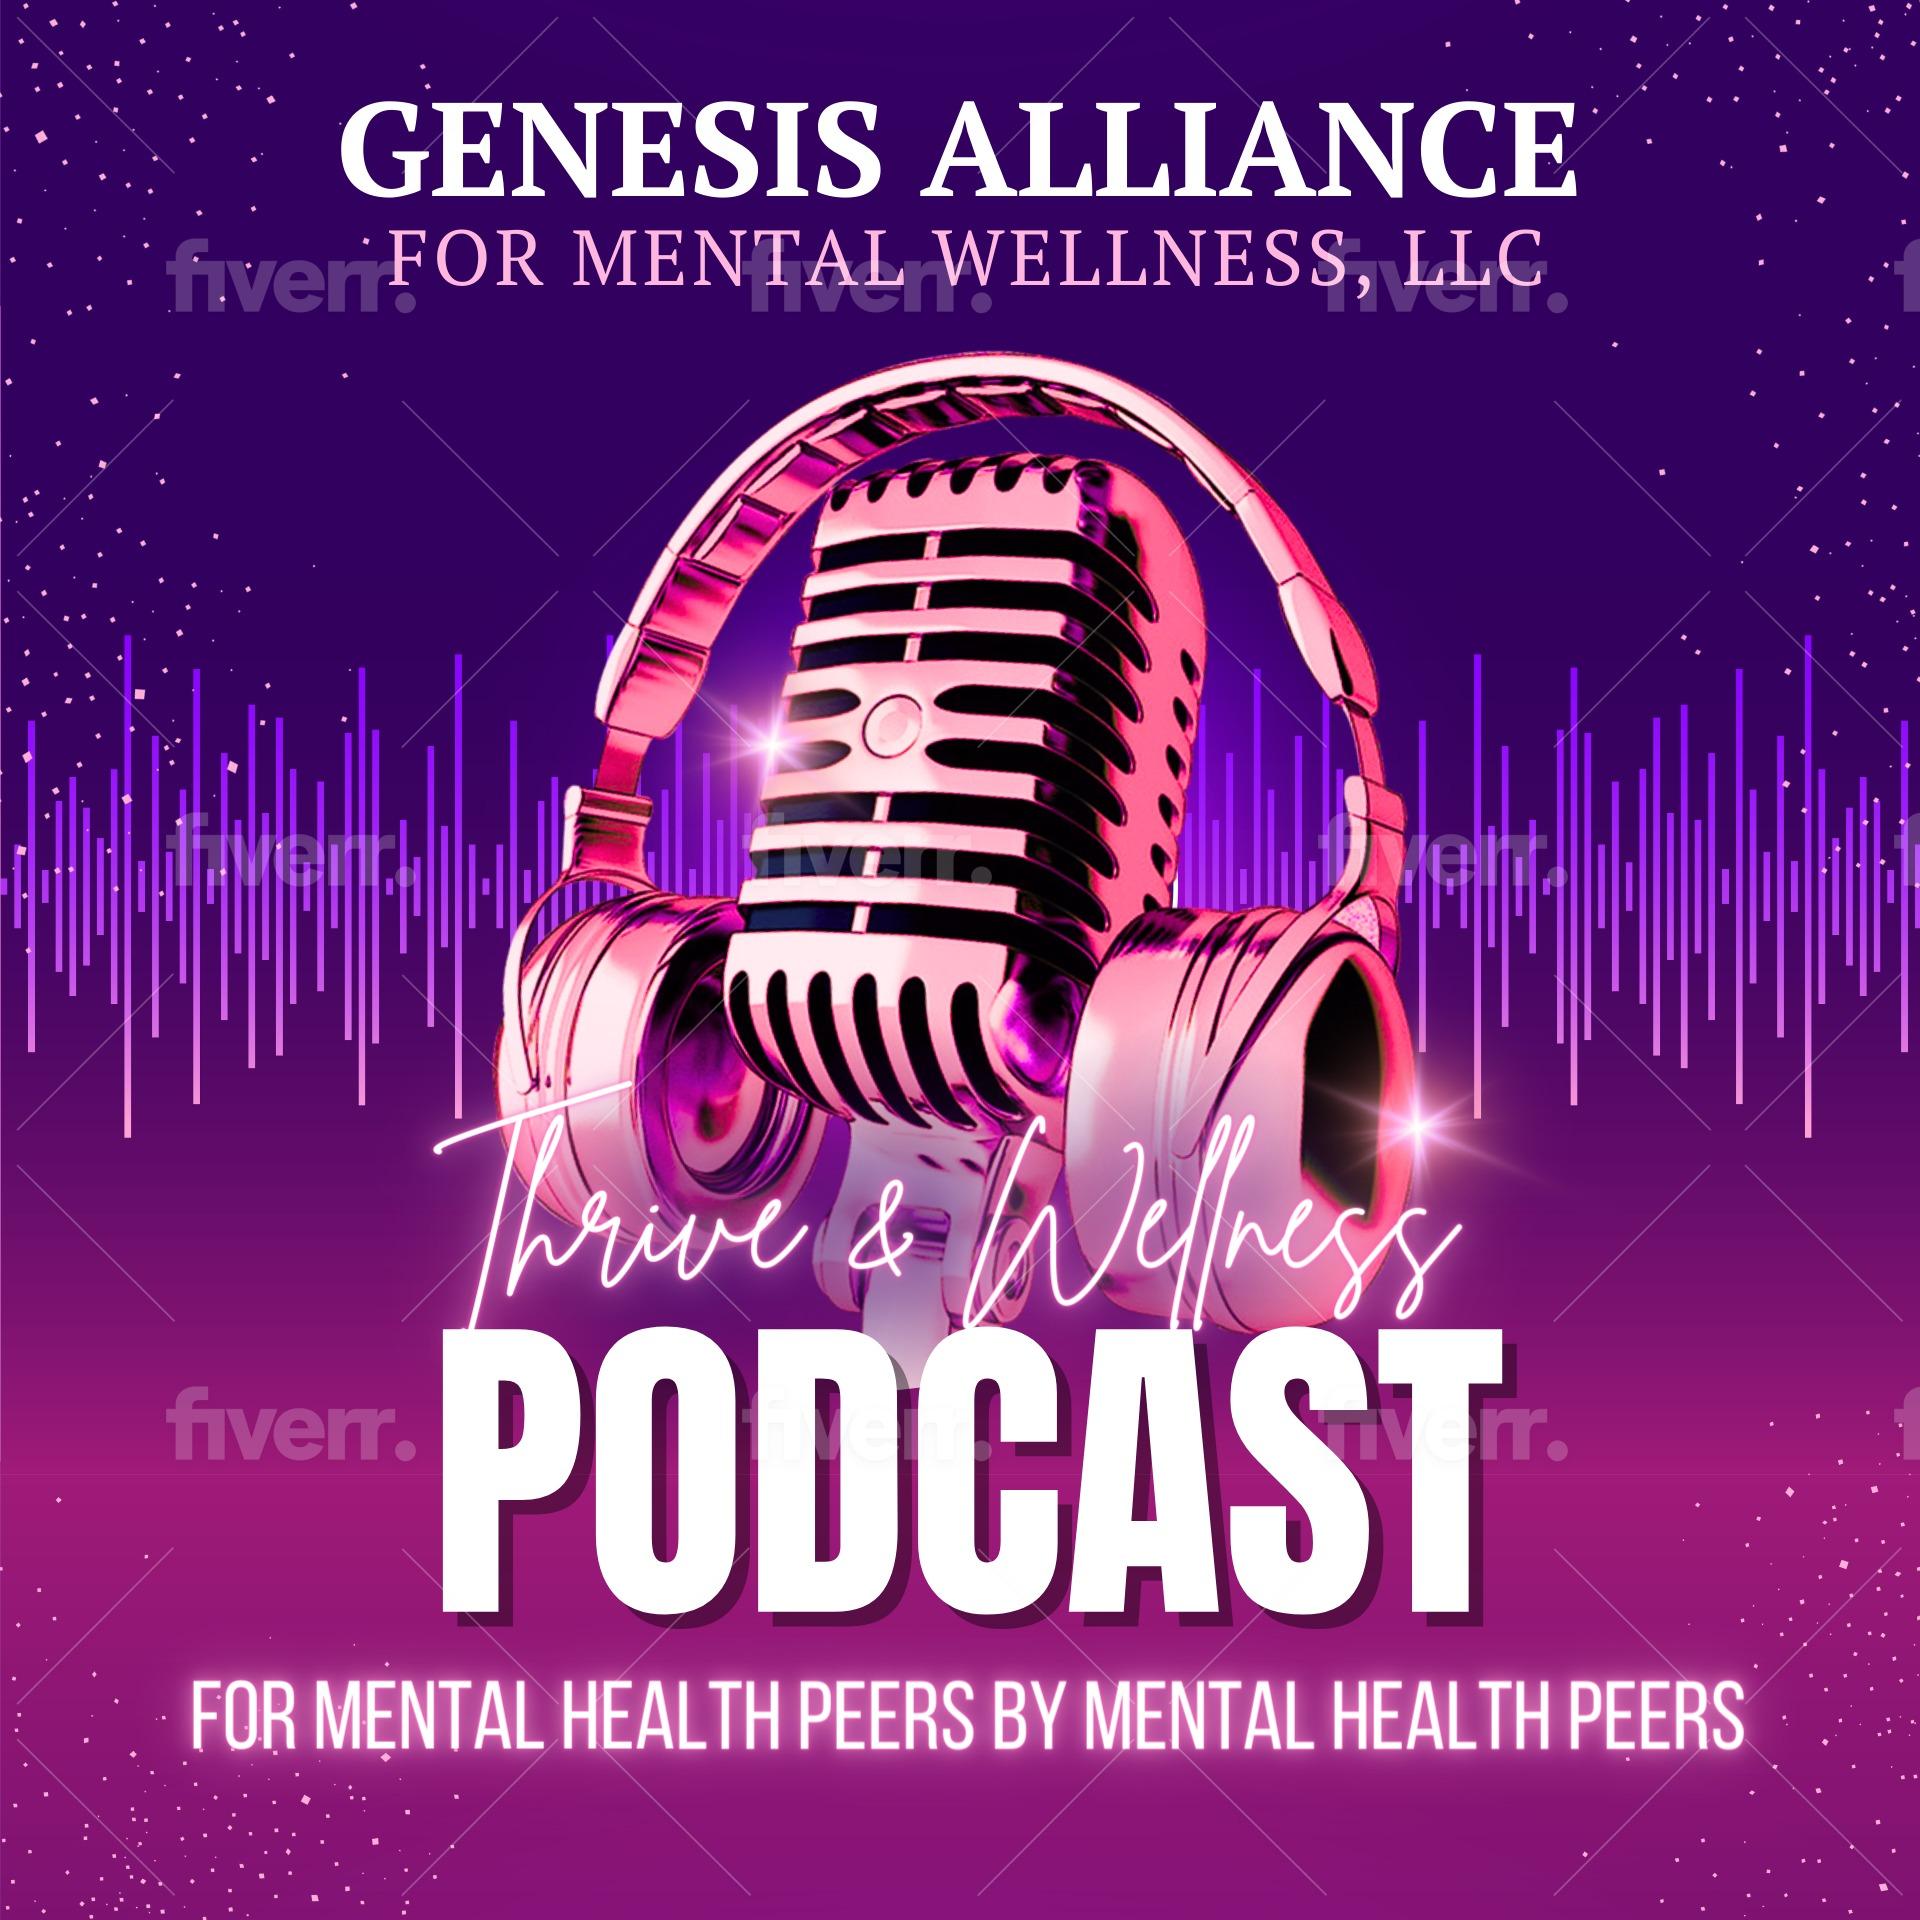 Genesis Alliance for Mental Wellness Community Podcast